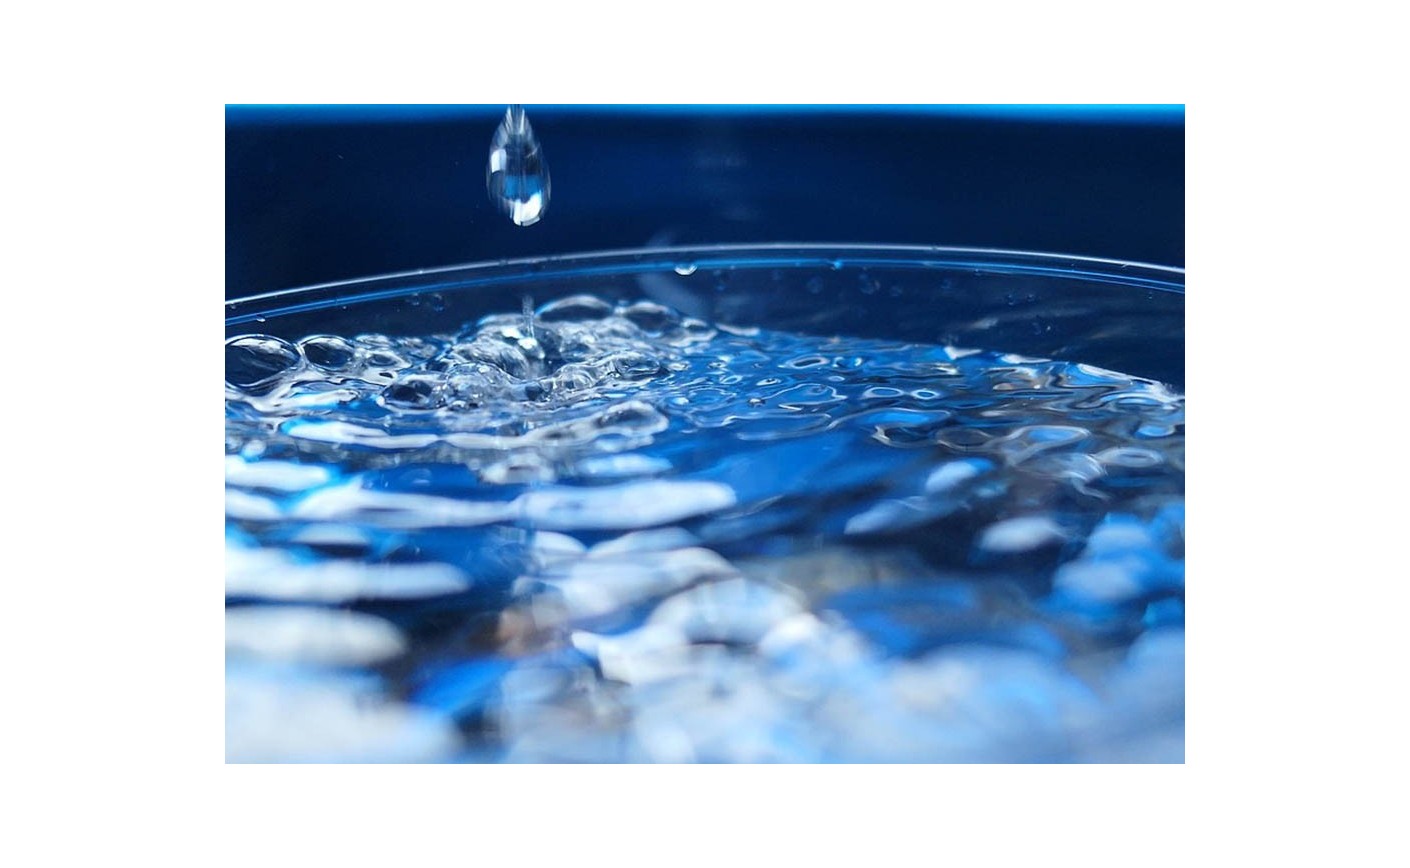 Productos de vanguardia competitivos para tratamiento de aguas